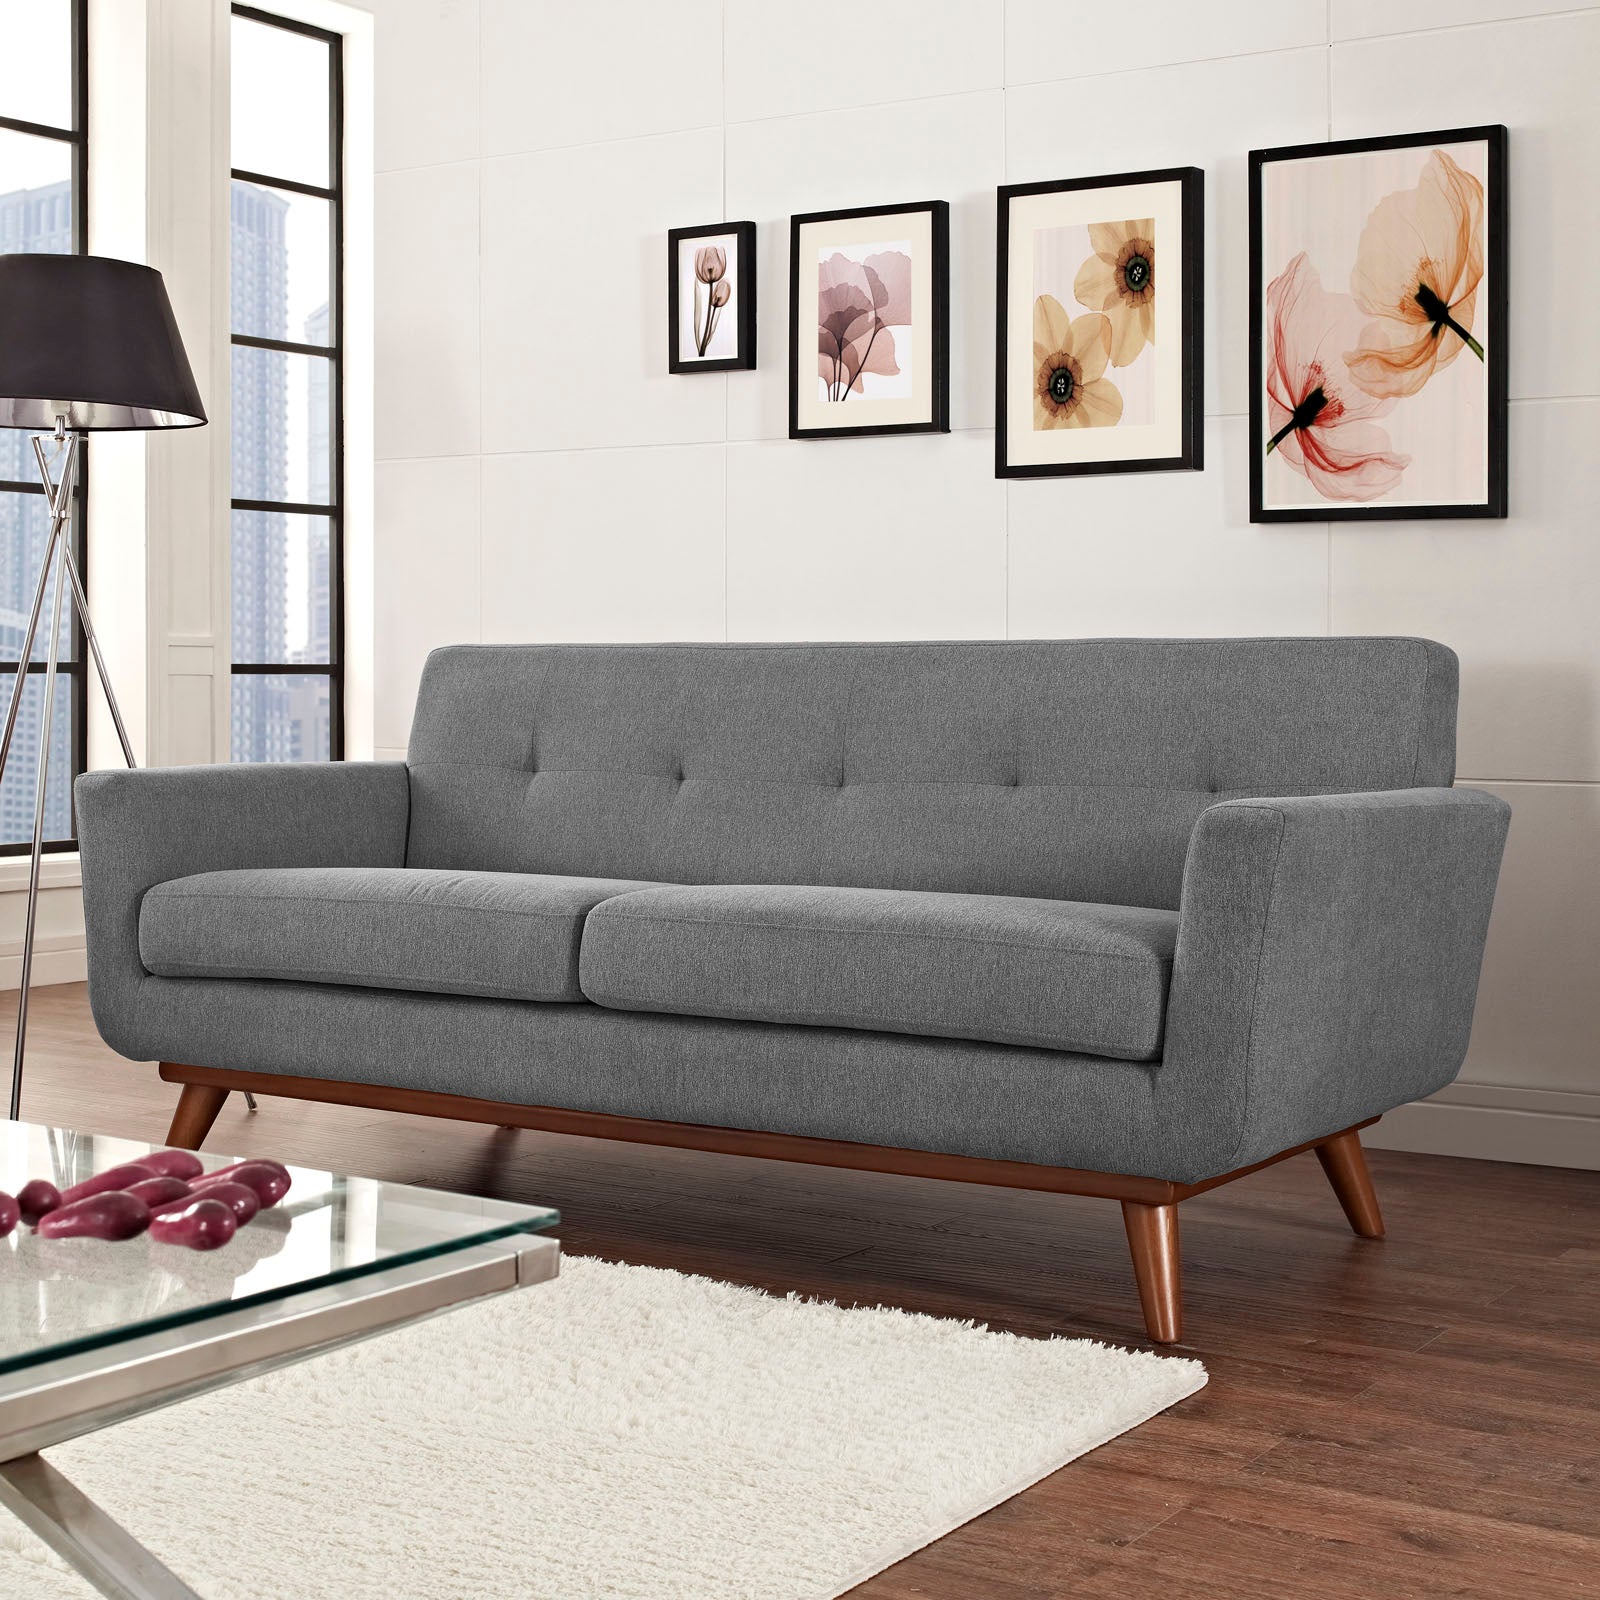 Engage Upholstered Fabric Loveseat - East Shore Modern Home Furnishings